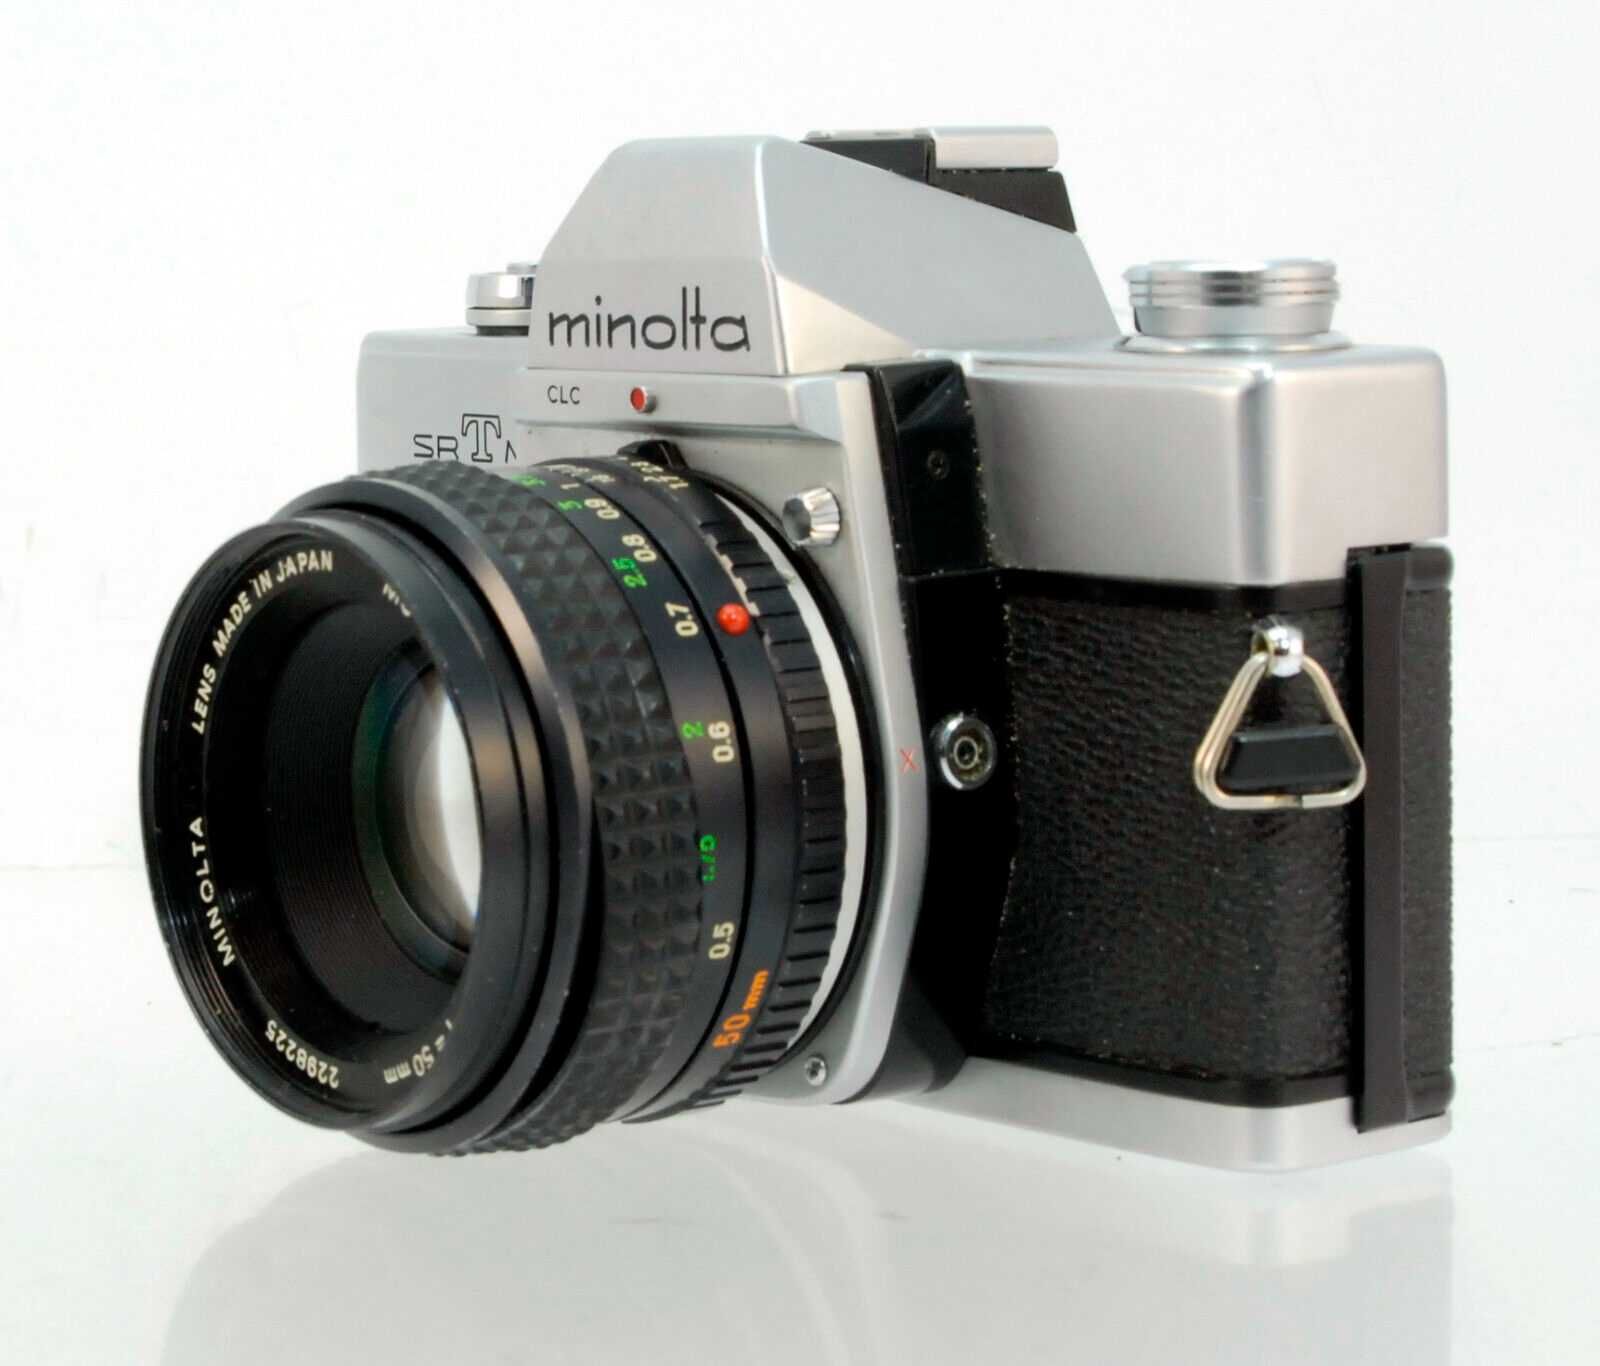 Minolta SRT MC-II + Rokkor 50mm - f/2 [testada e limpa]